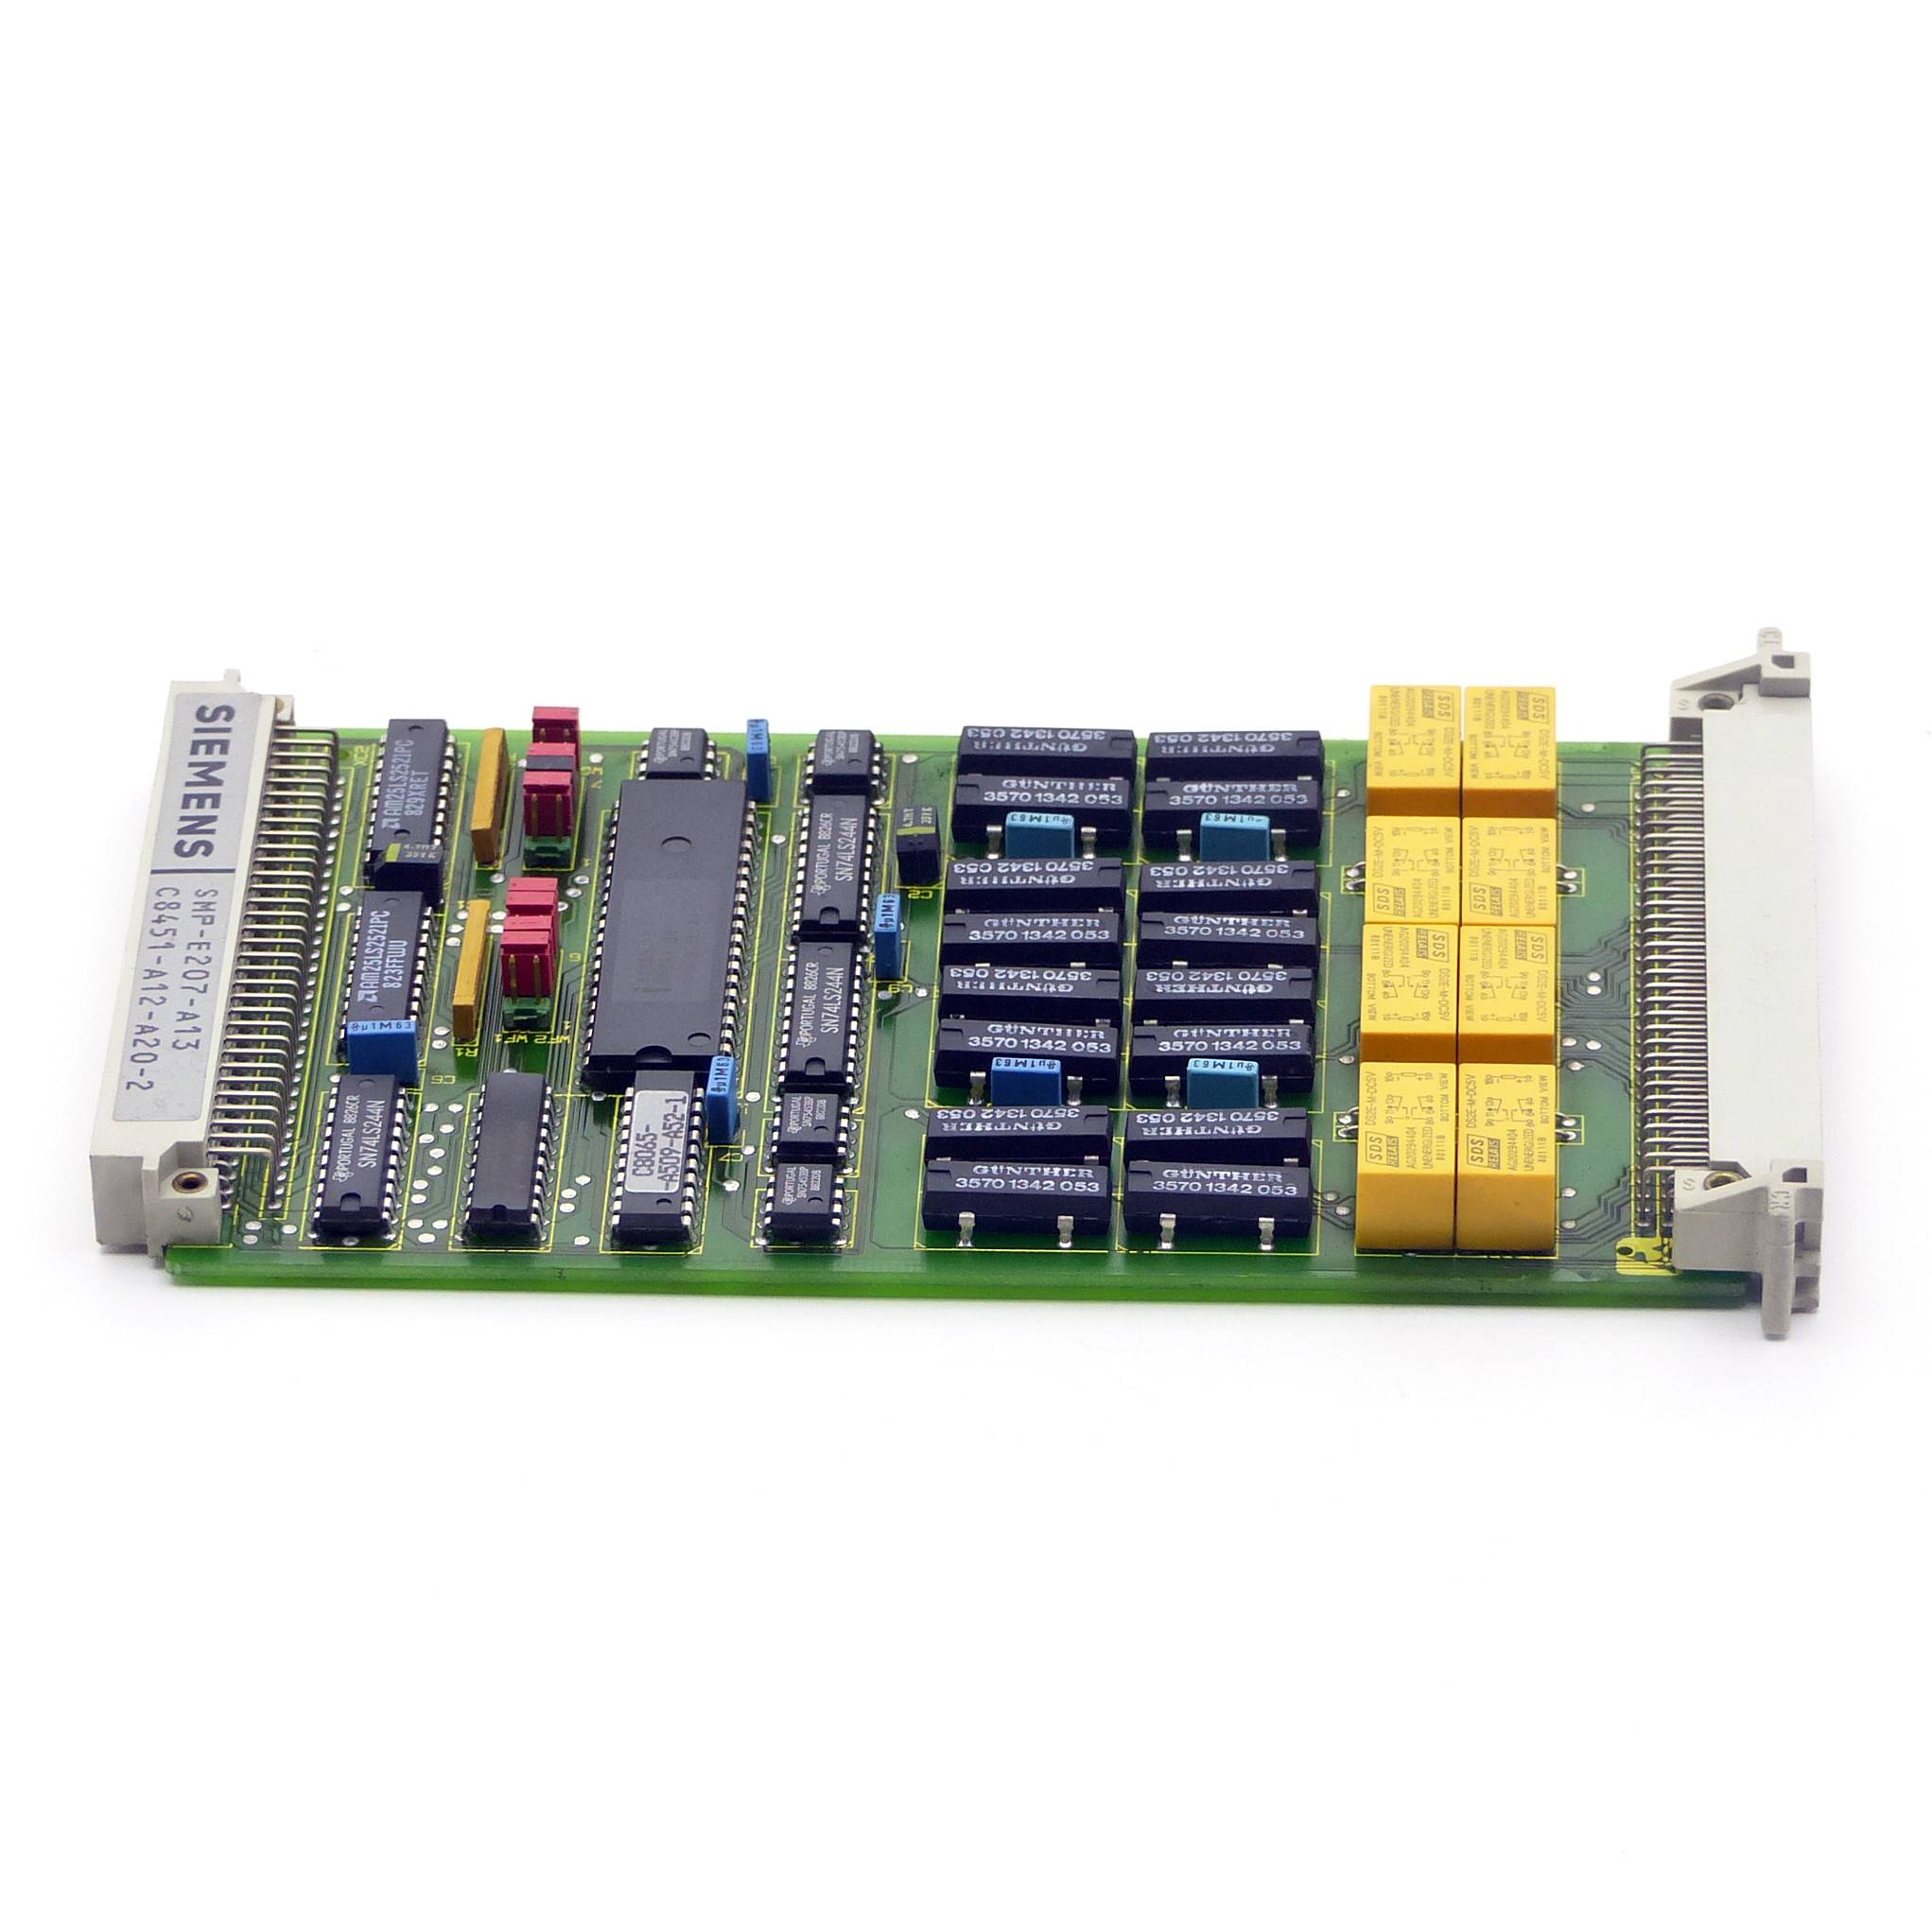 Leiterplatte SMP-E208-A1 